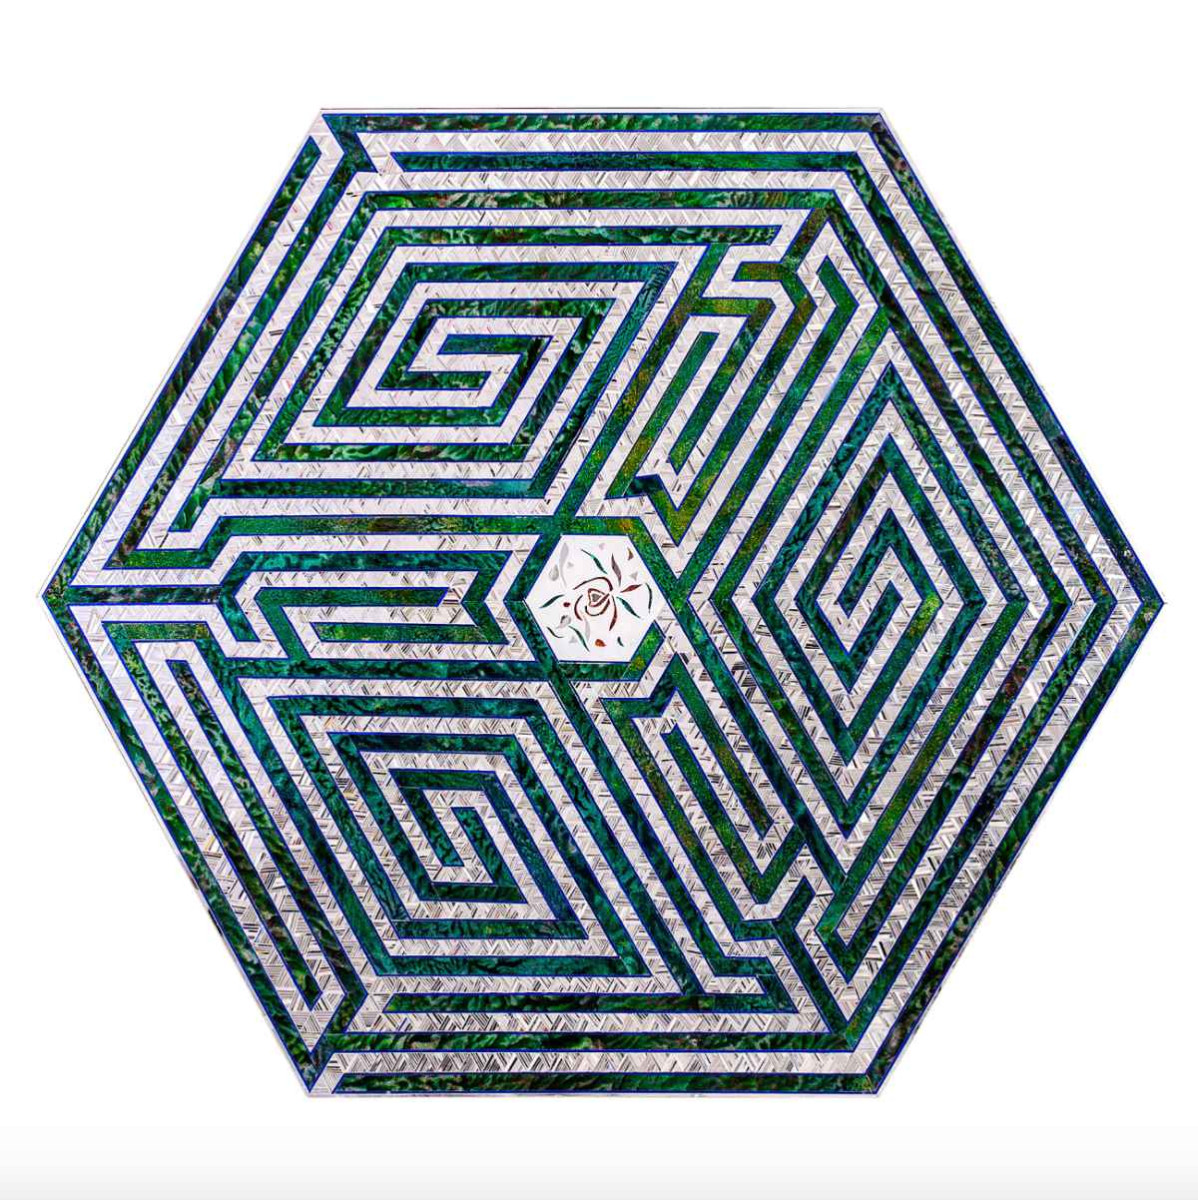 Hexagon (Maze), 2012. Monir Farmanfarmaian. Πηγή: Christie's